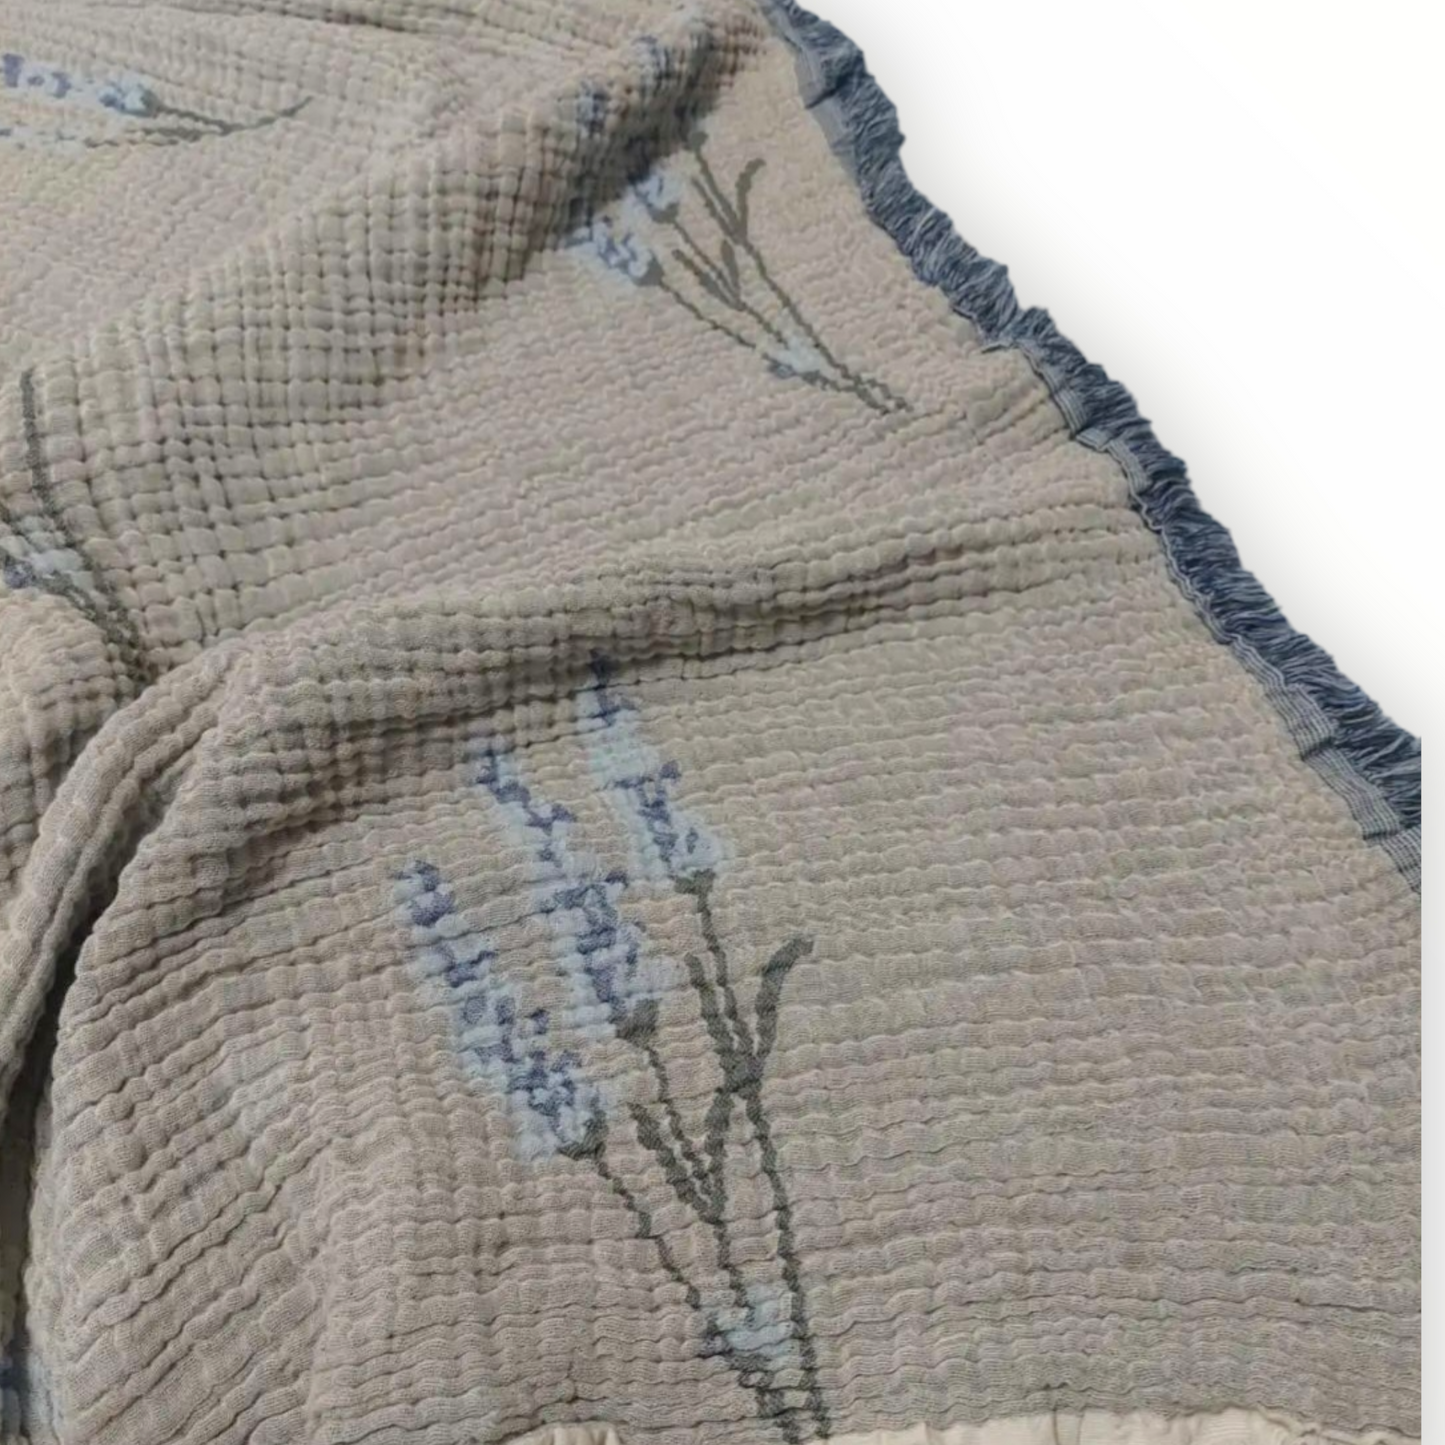 Natural Cotton Muslin Bed Cover for Adults Gauze Blanket Lavender Design